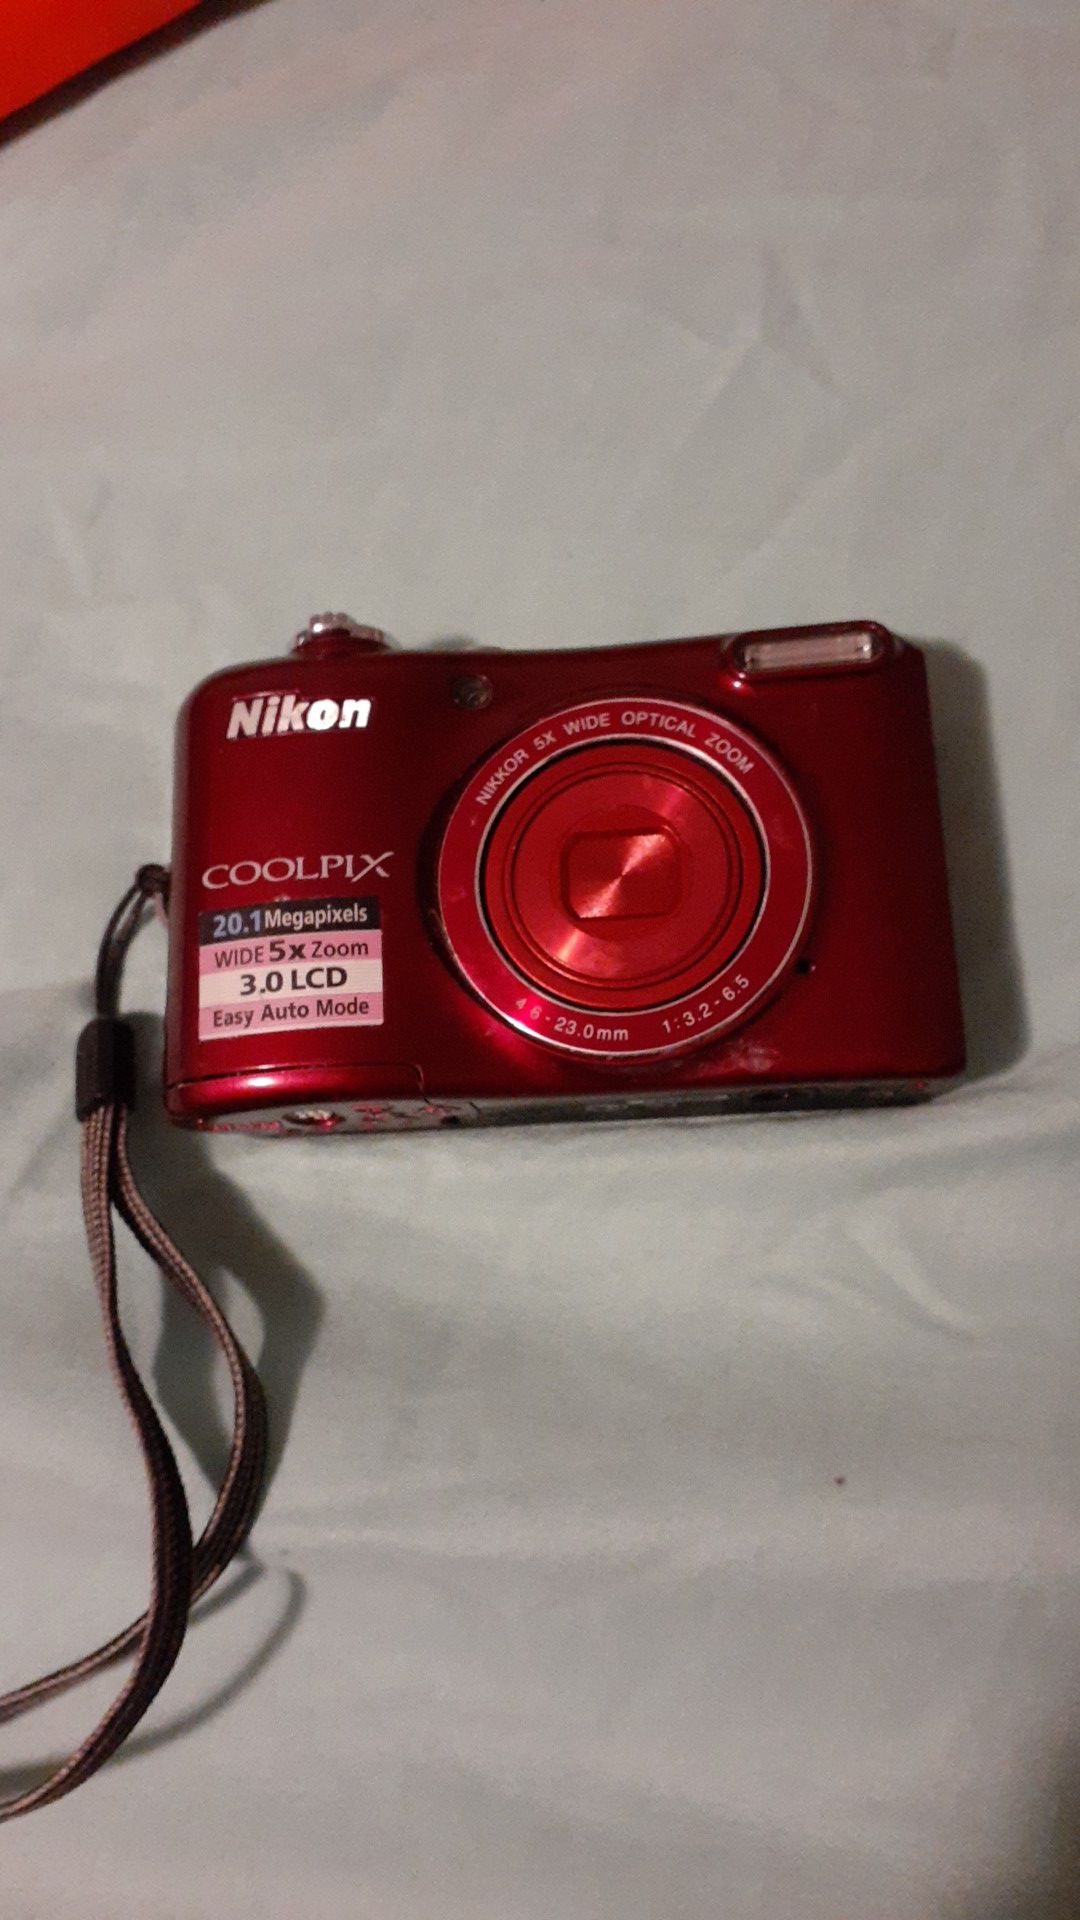 Nikon coolpix 20.1 megapixels